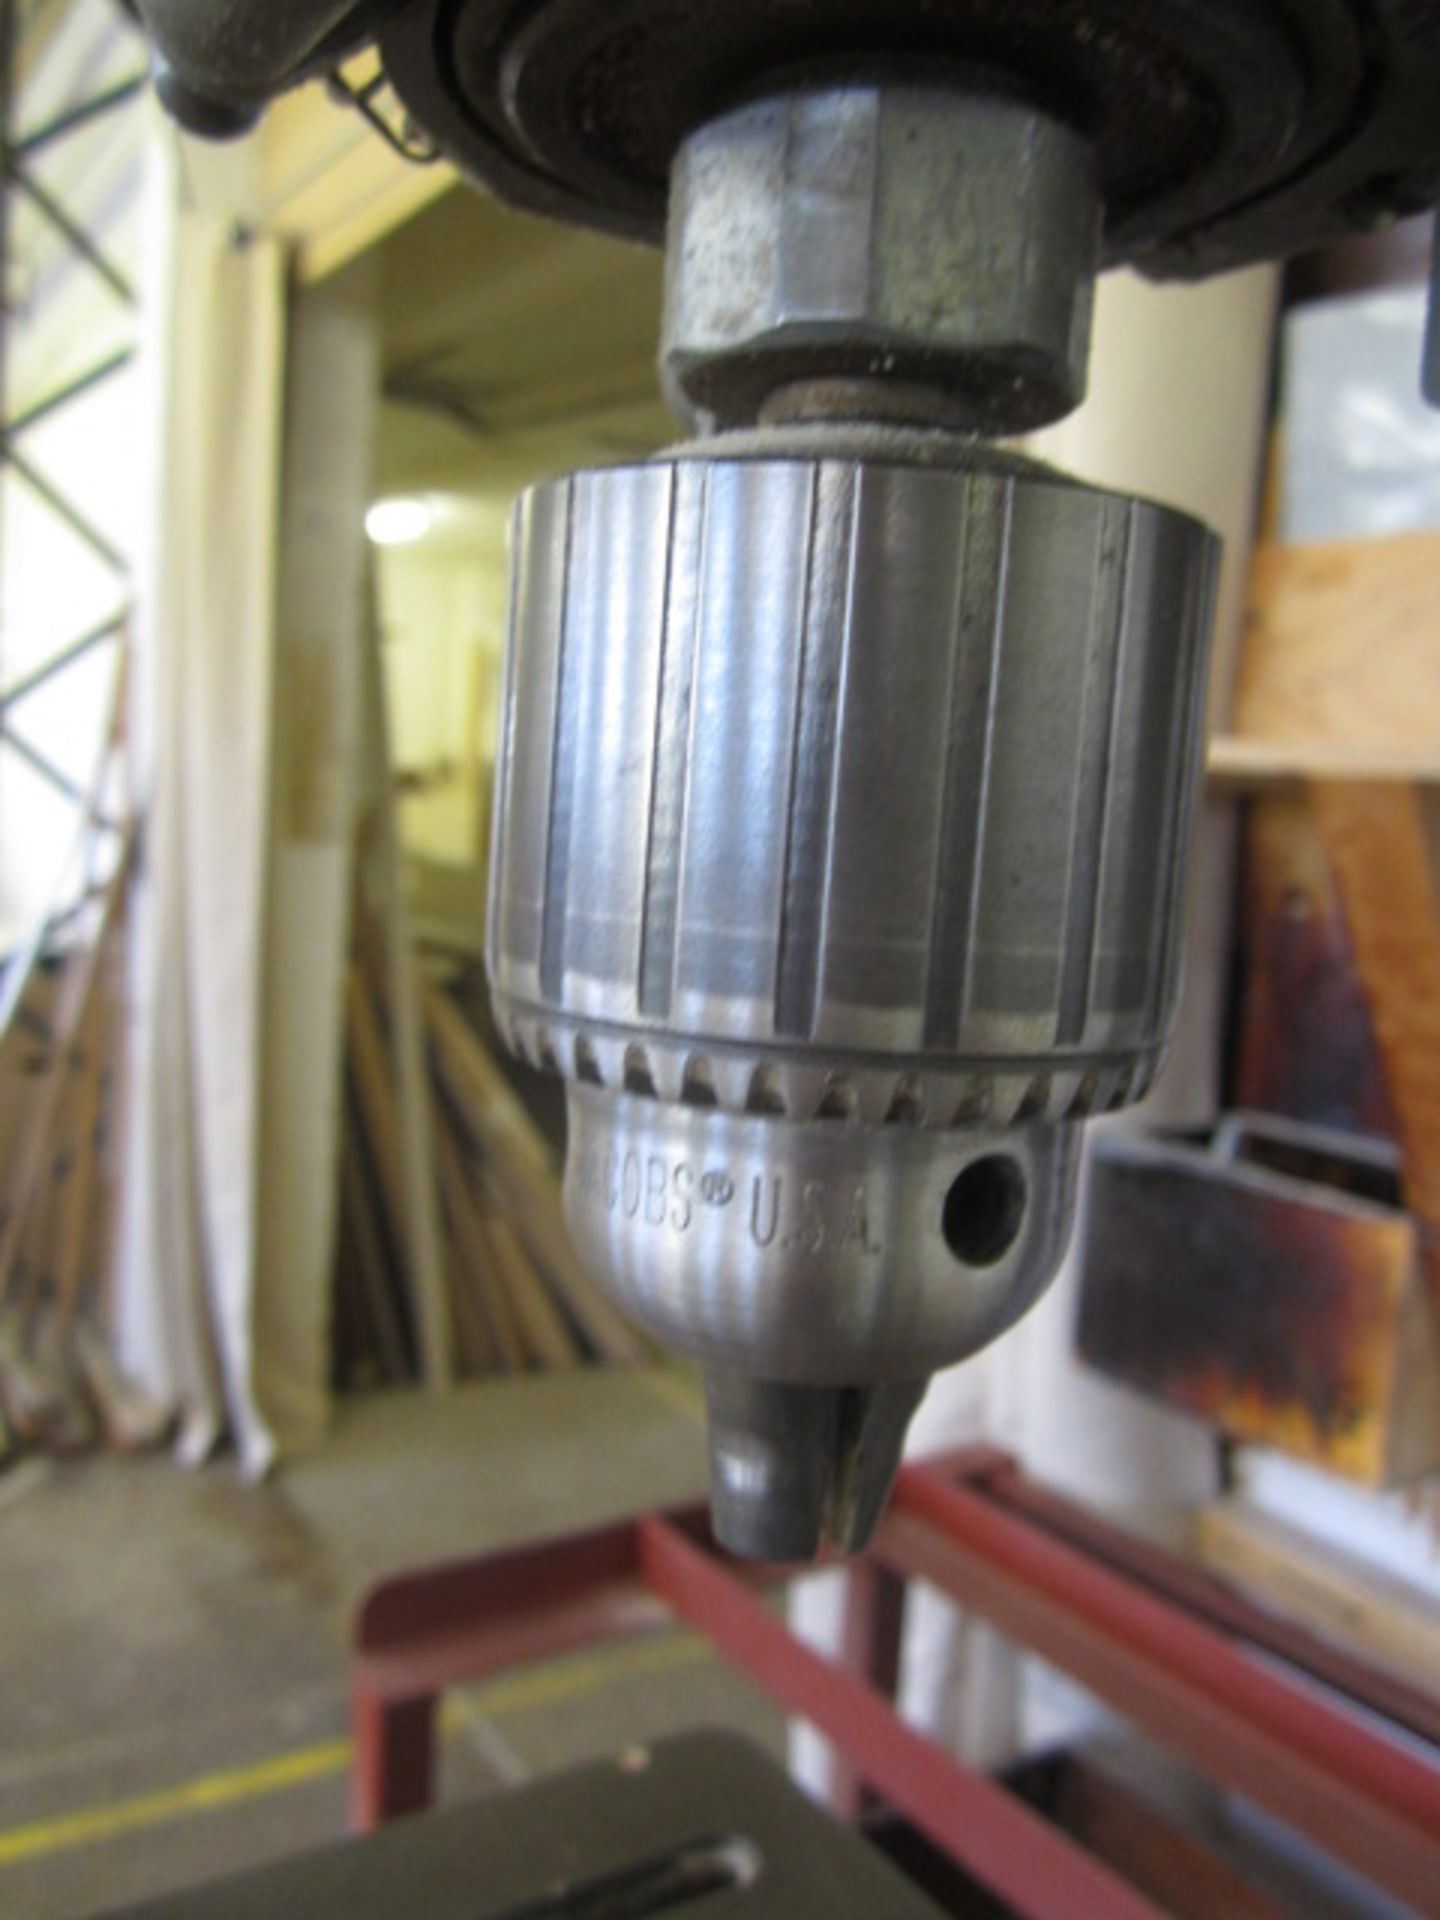 Fobco 16mm Universal MT pillar drill, serial no: 47955U, rise & fall table - Image 2 of 4